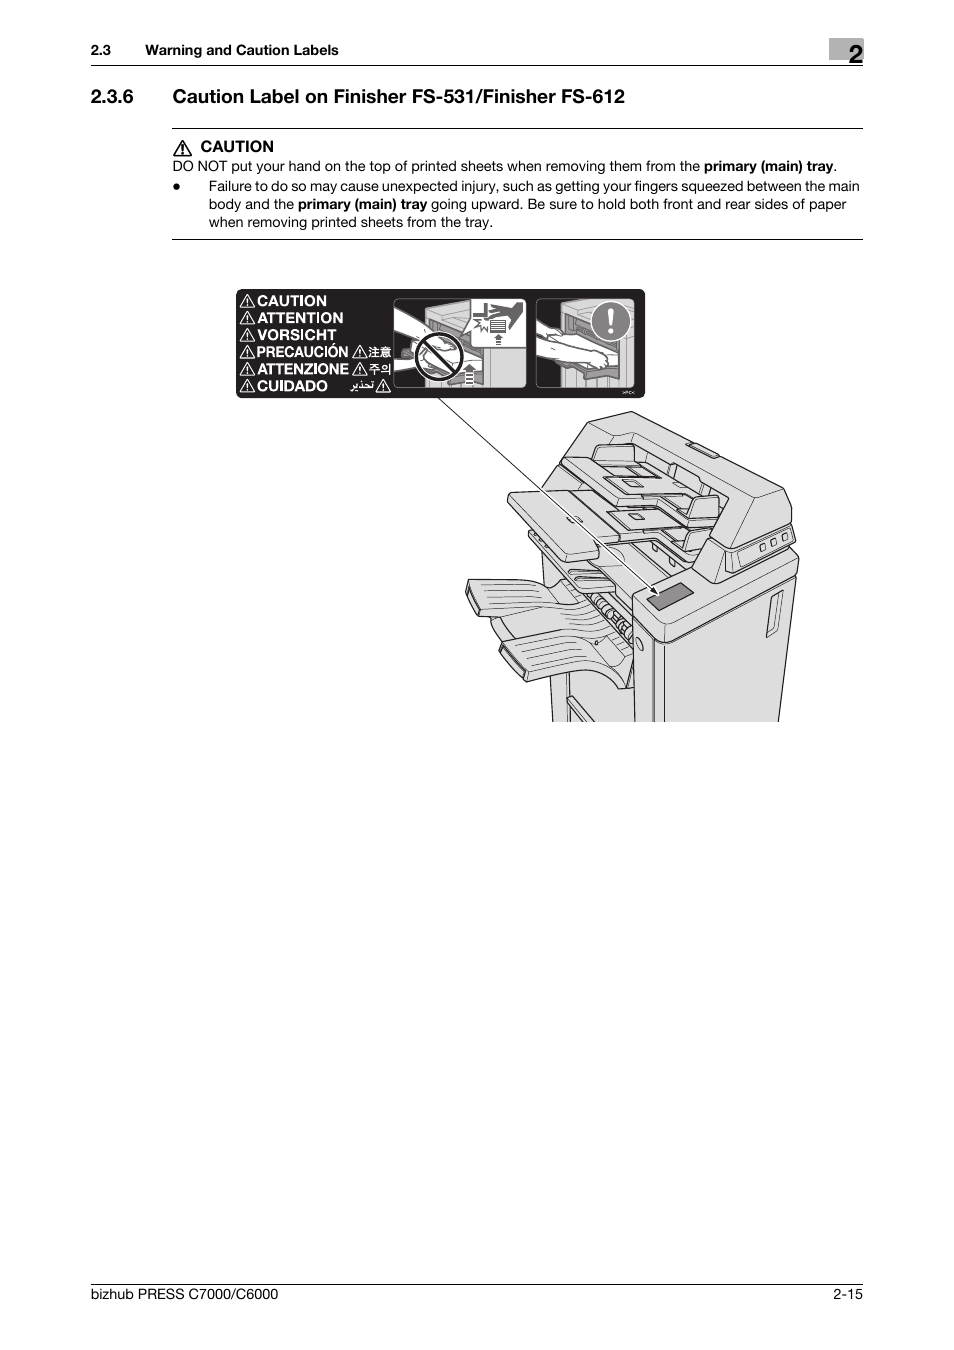 6 caution label on finisher fs-531/finisher fs-612 | Konica Minolta bizhub PRESS C6000 User Manual | Page 24 / 42